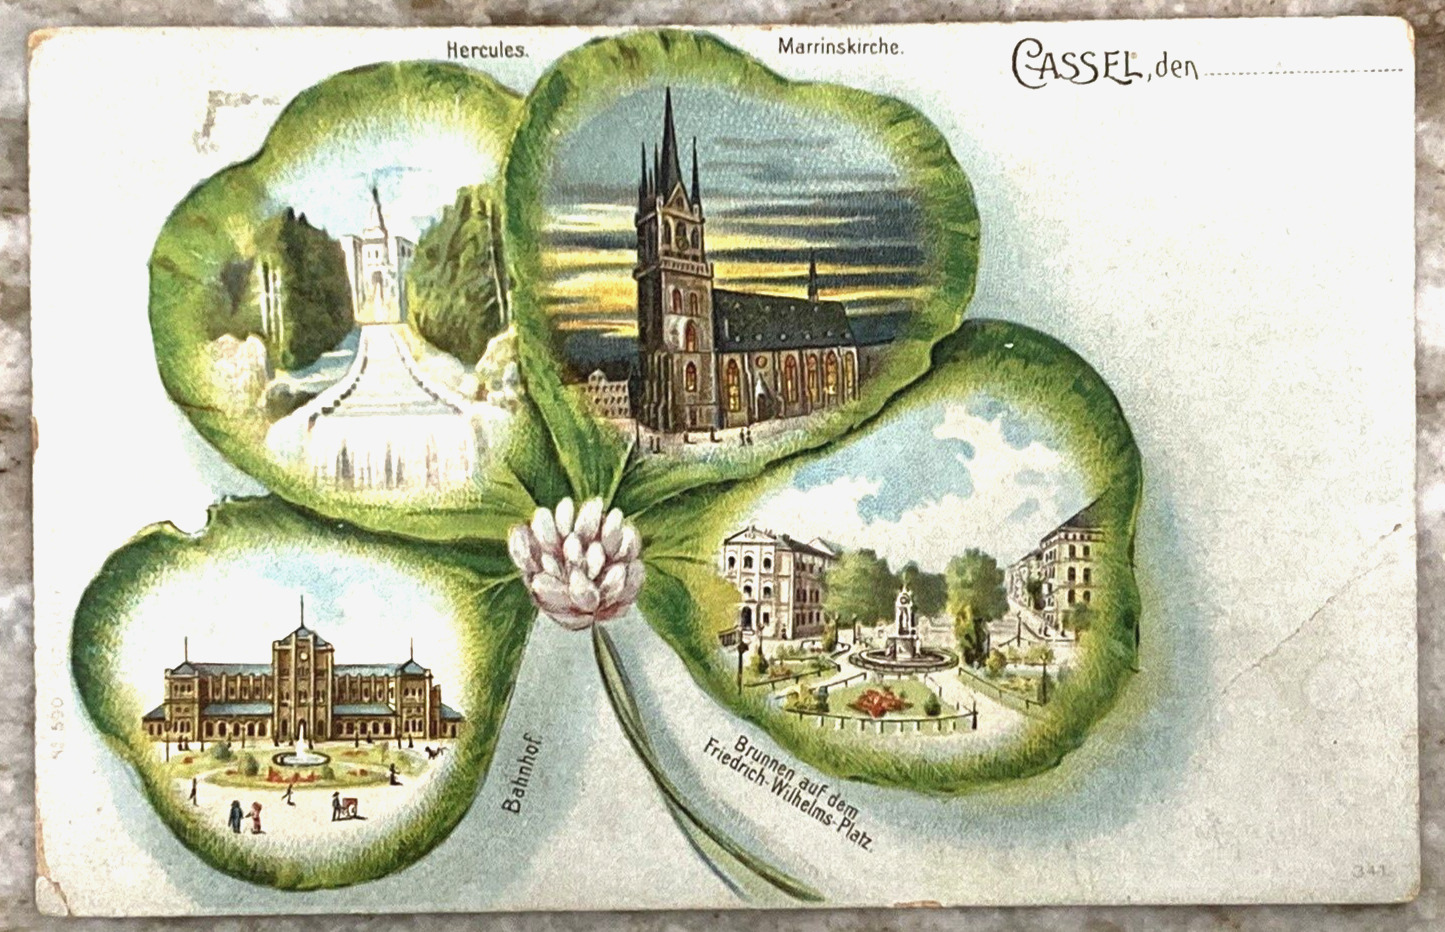 Cassel Germany Four Leaf Clover Marrinskriche Bahnhof Hercules Postcard 2406